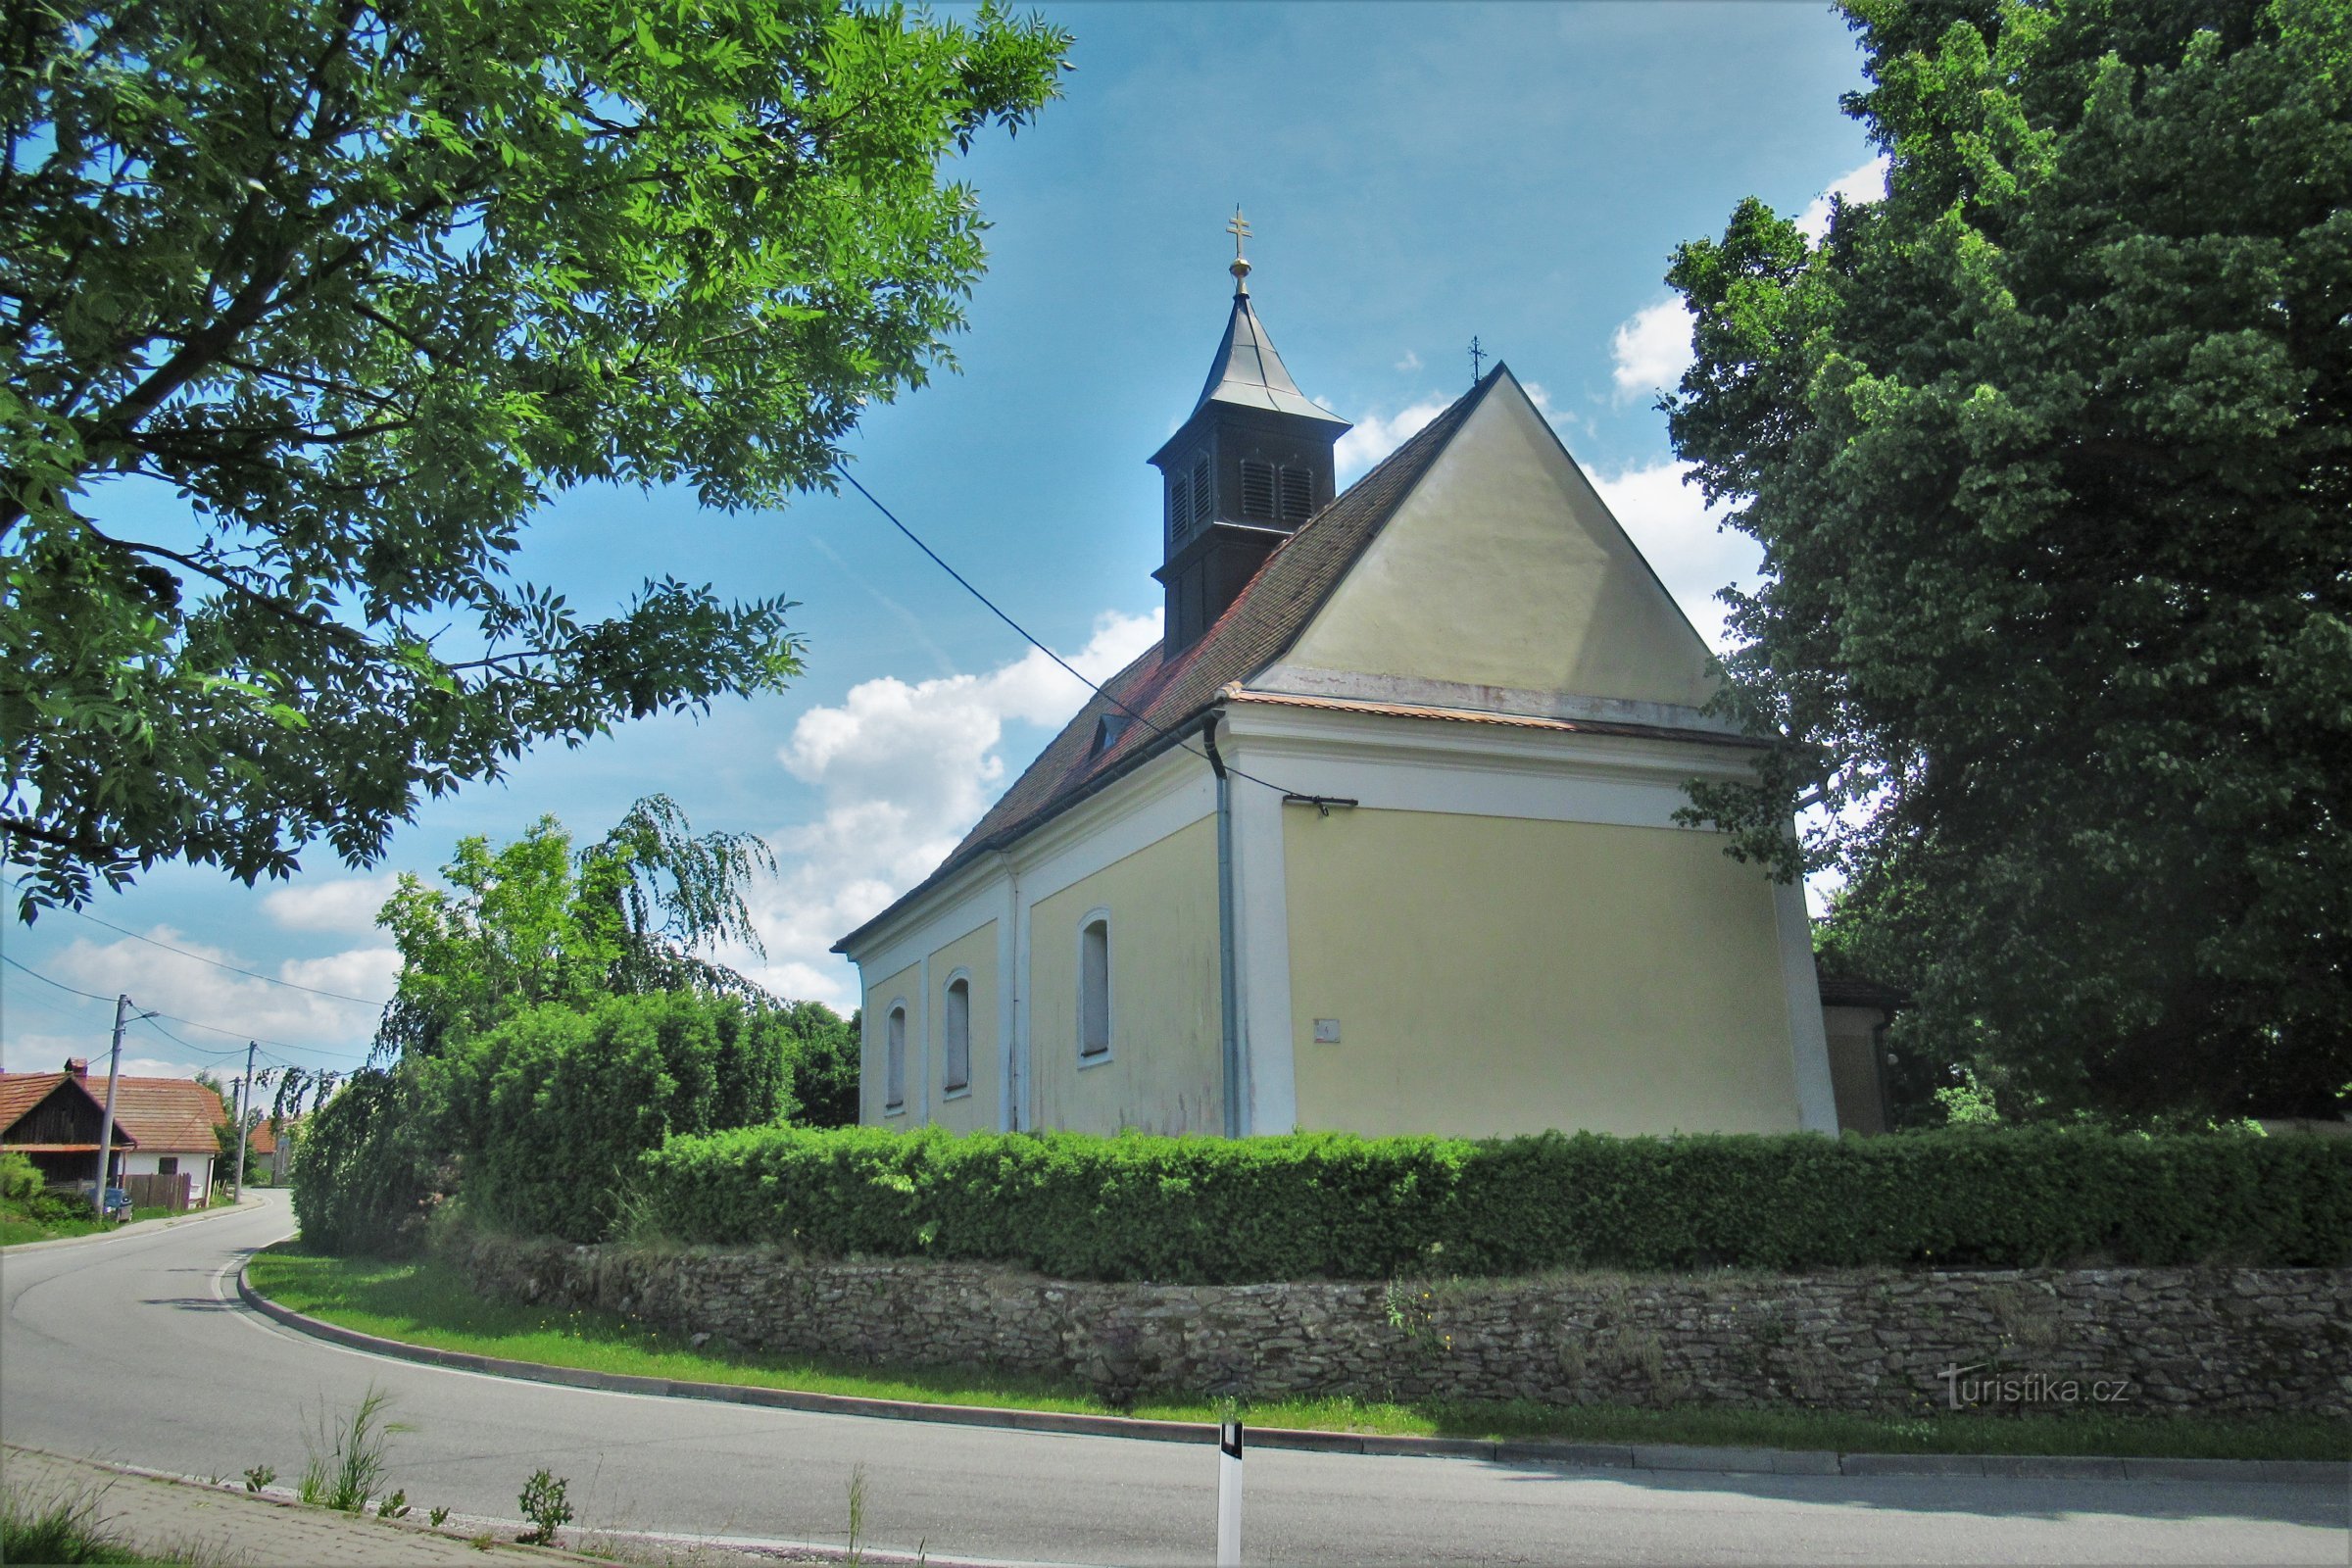 Nemčice - Εκκλησία του St. Νικόλαος